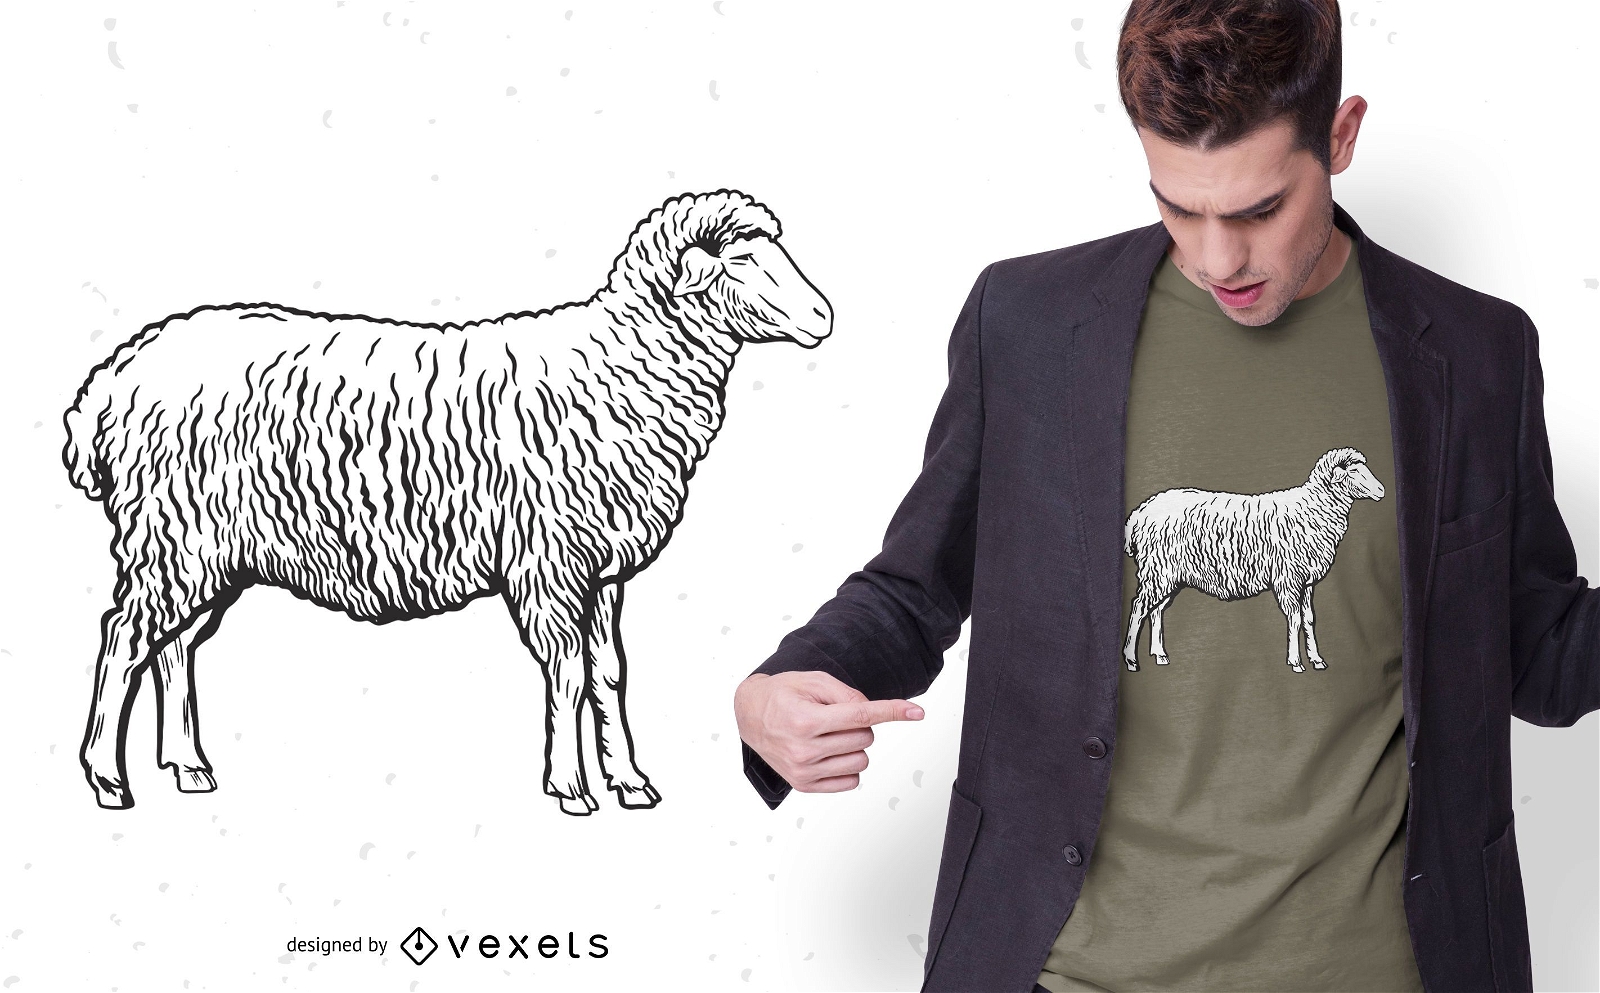 Sheep t-shirt design